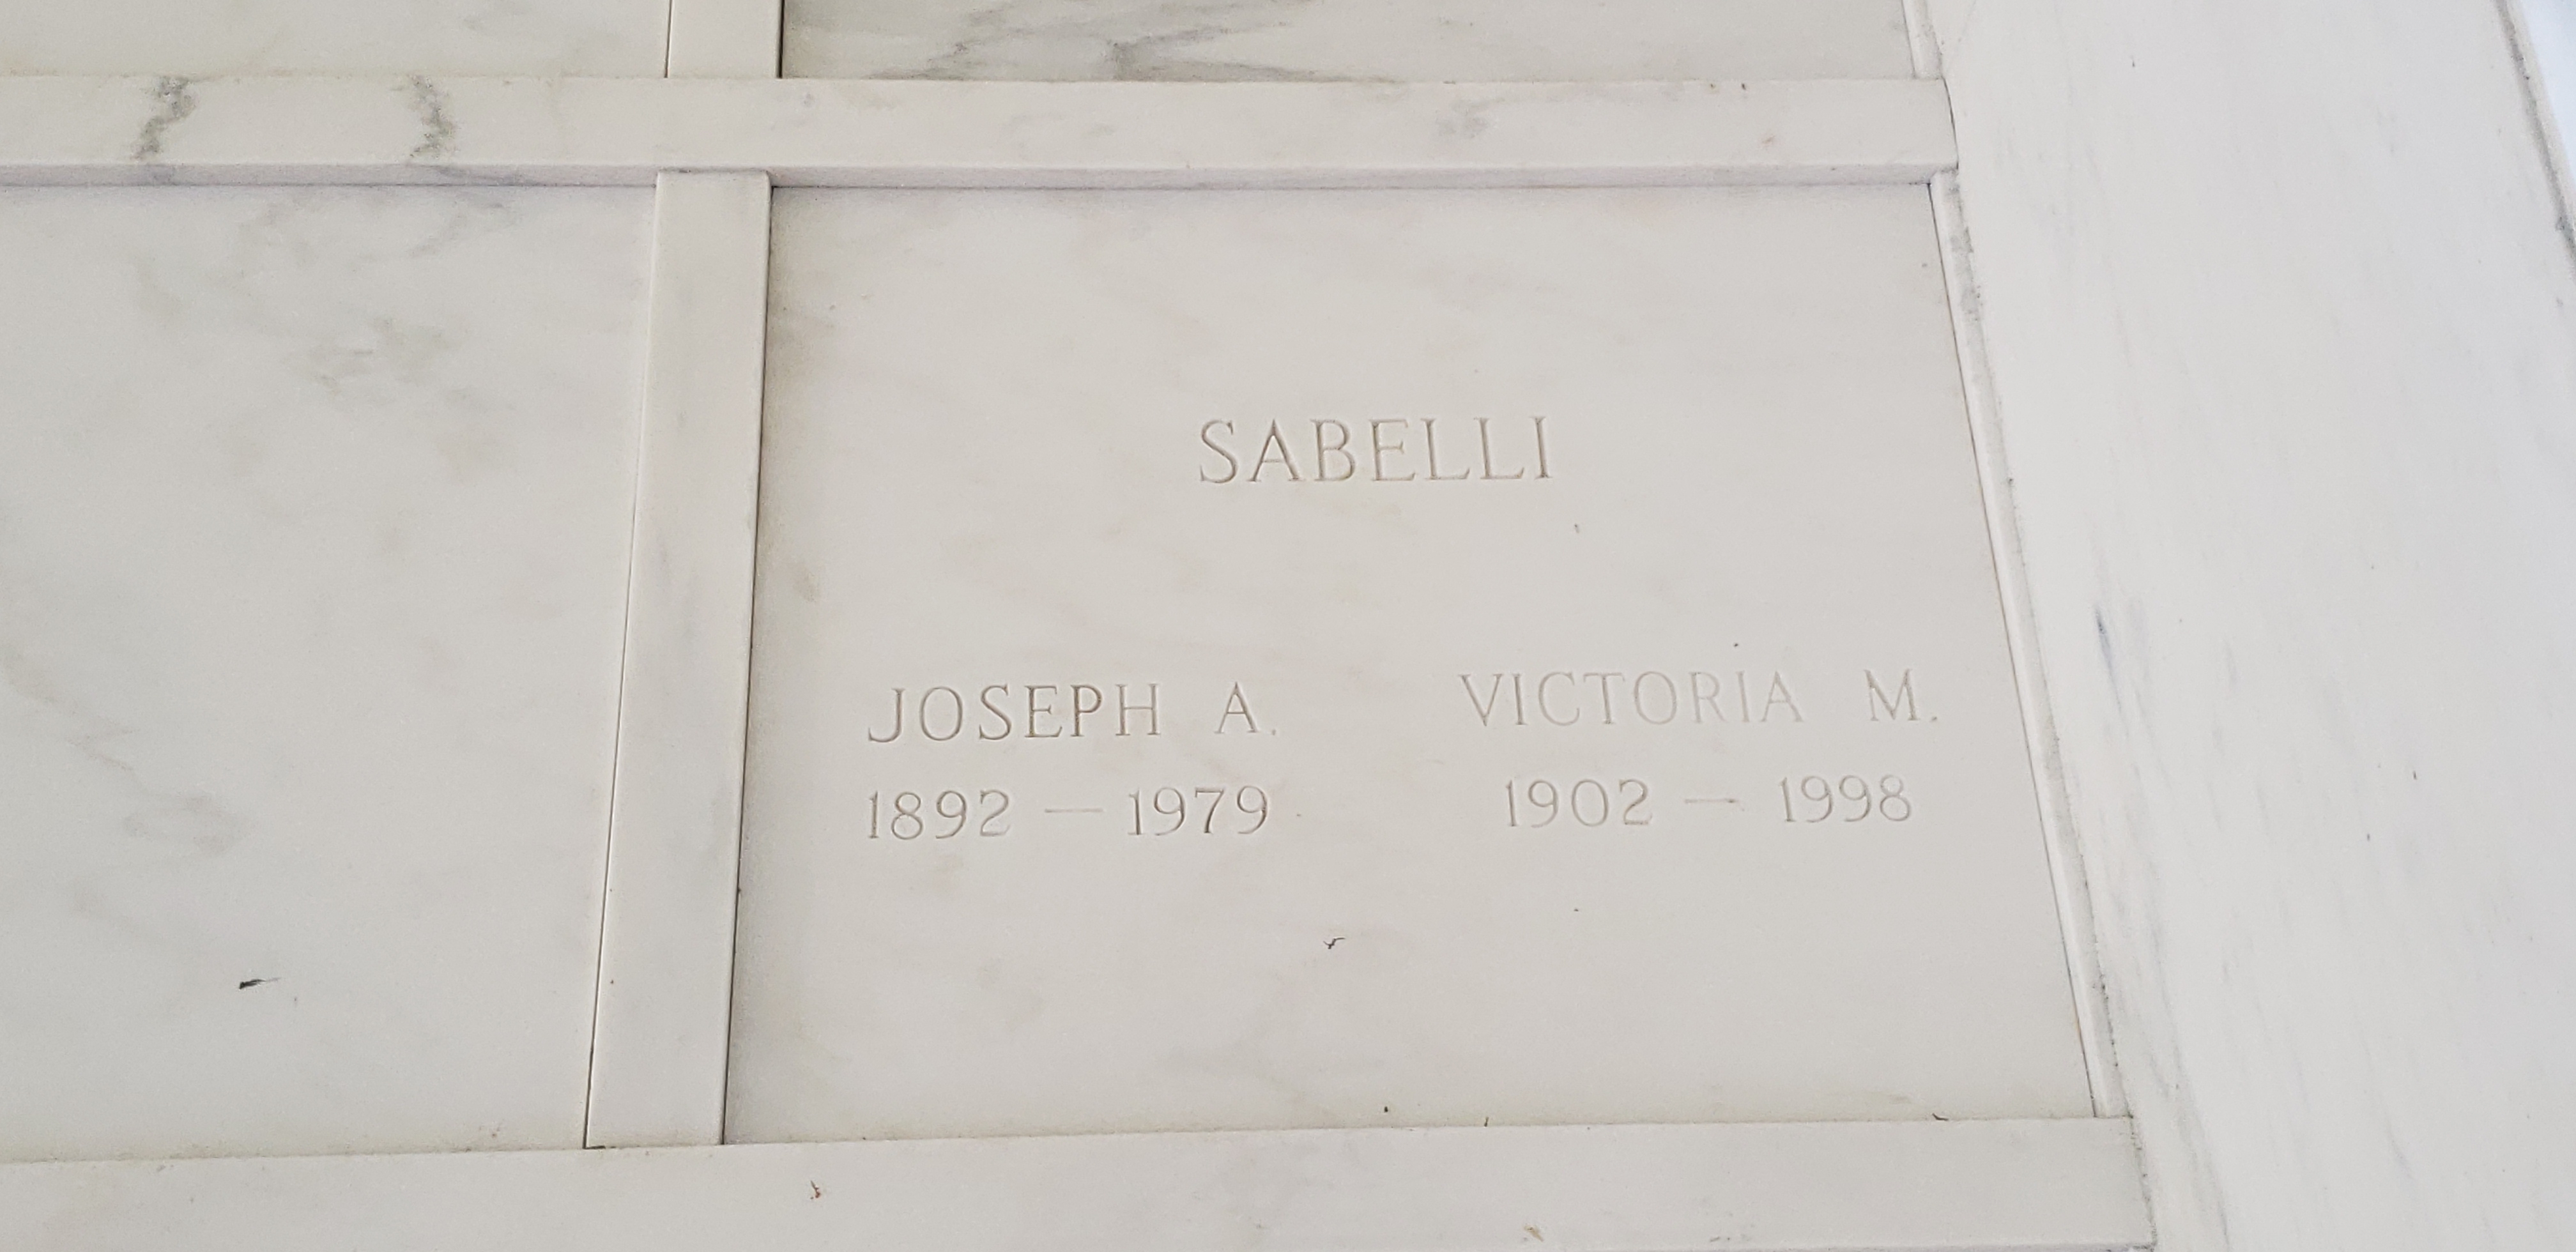 Joseph A Sabelli